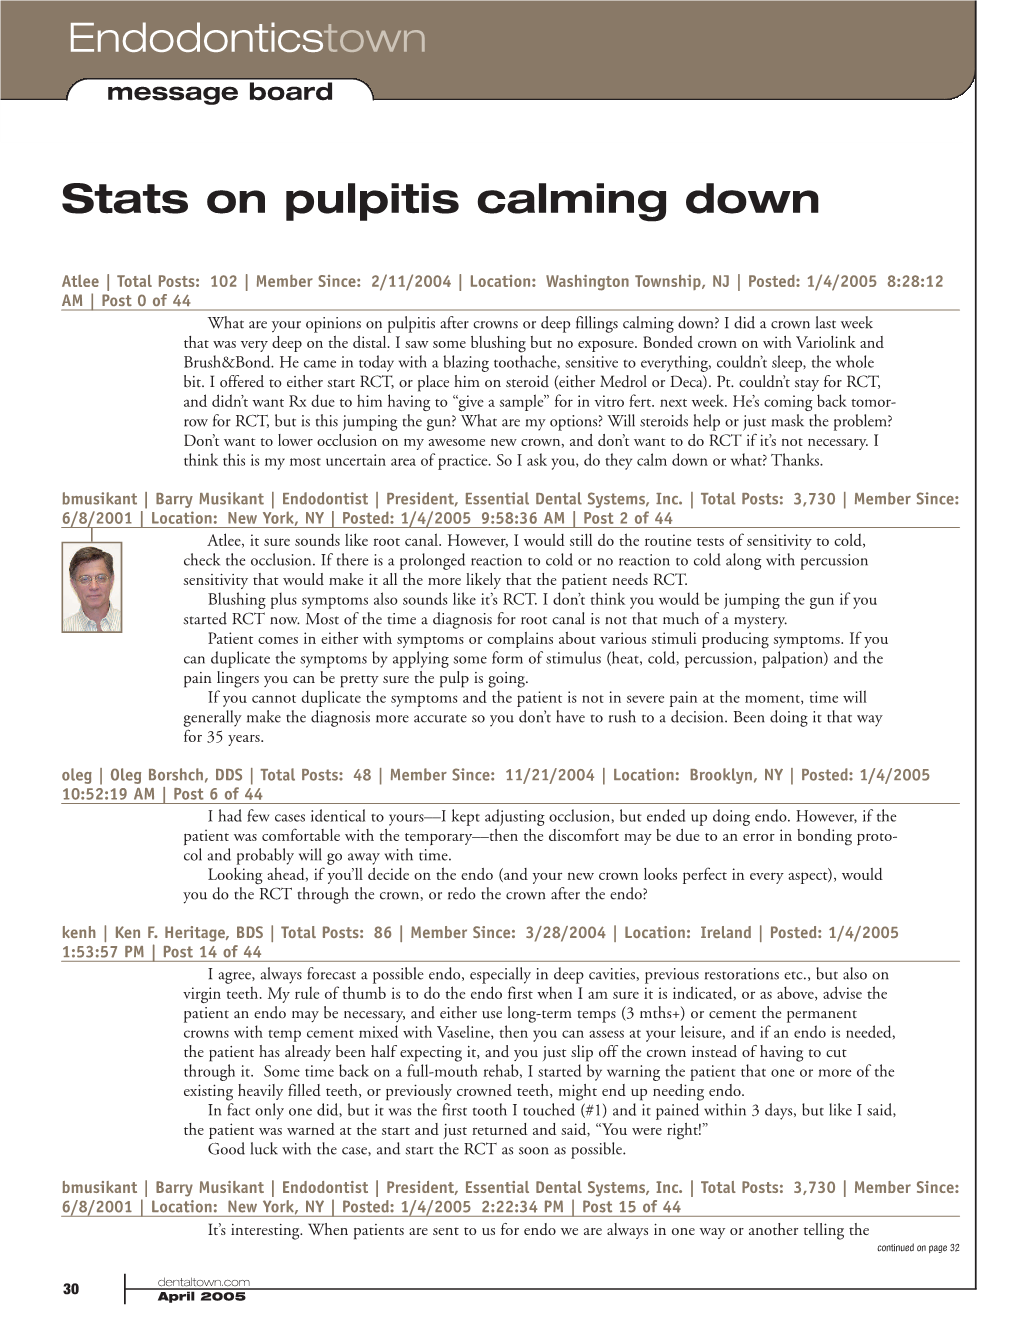 Endodonticstown Stats on Pulpitis Calming Down